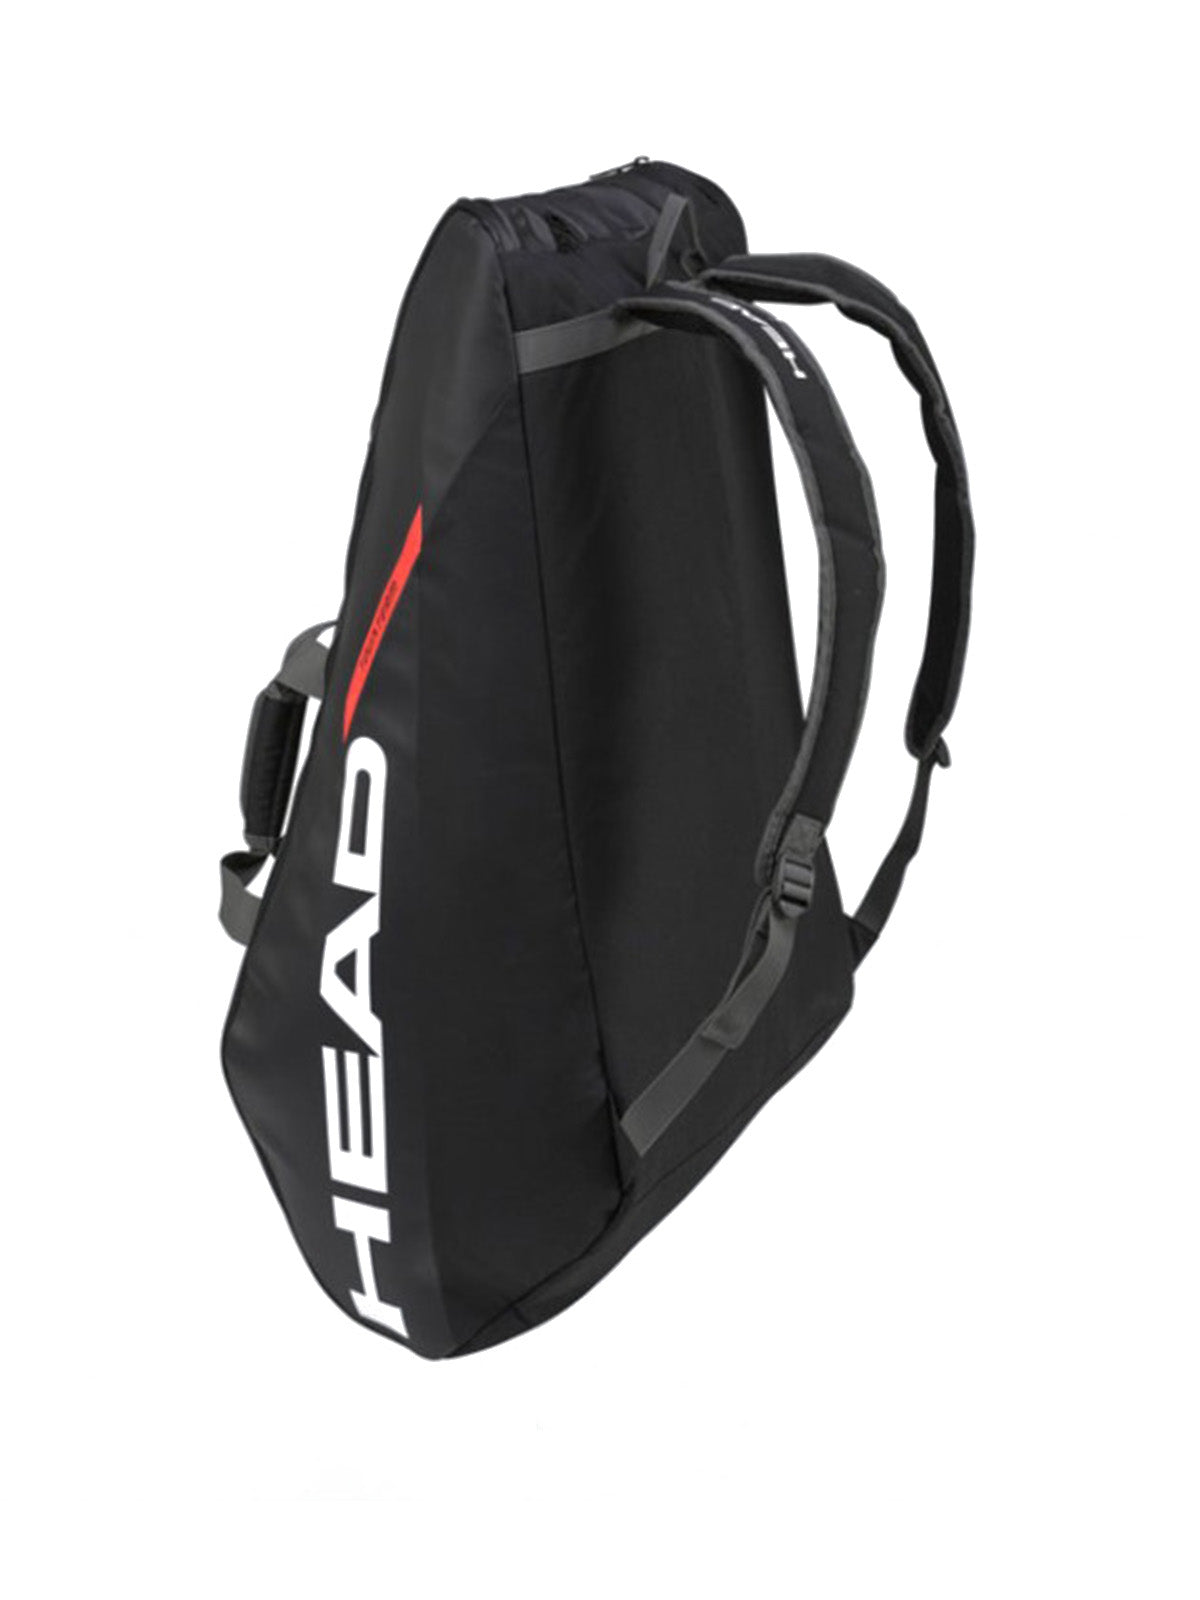 Head Unisex Equipment Bags - Head Tour Team X 12 Monstercombi Tennis Bag - Black